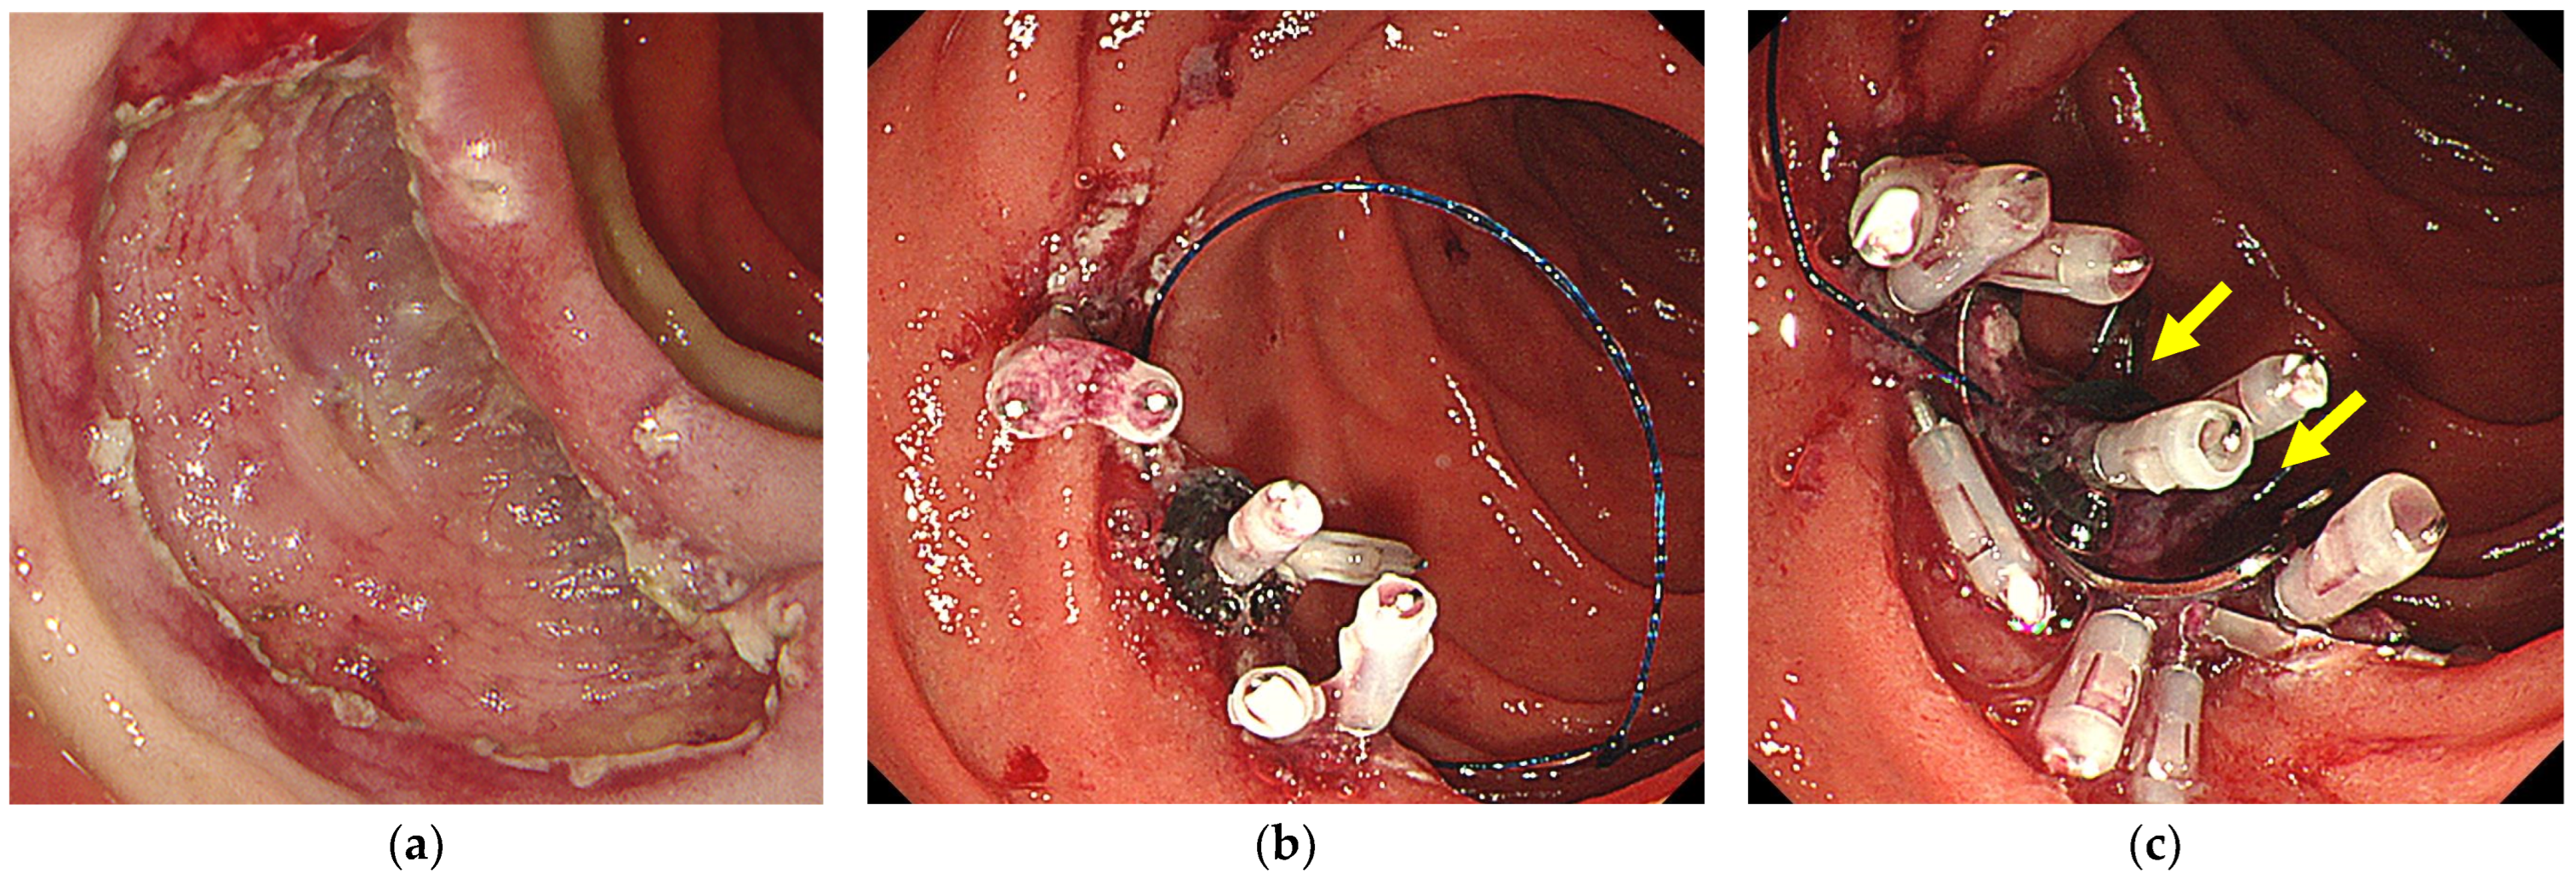 Endoscopic clip closure techniques used in the present study. a